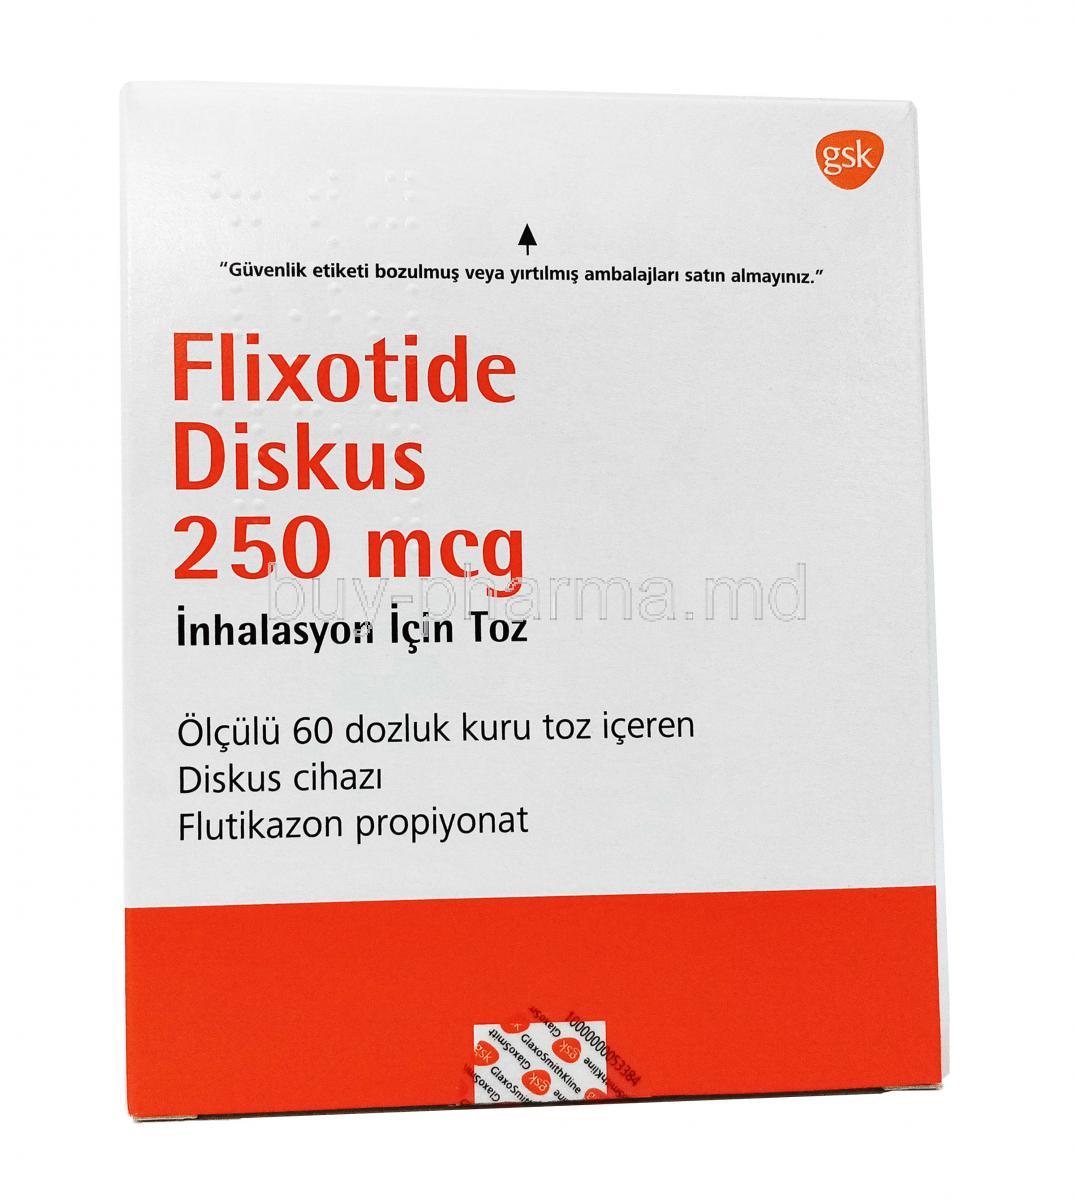 Flixotide Diskus, Fluticasone Propionate, 250 mcg 60 doses Inhaler, Box front view